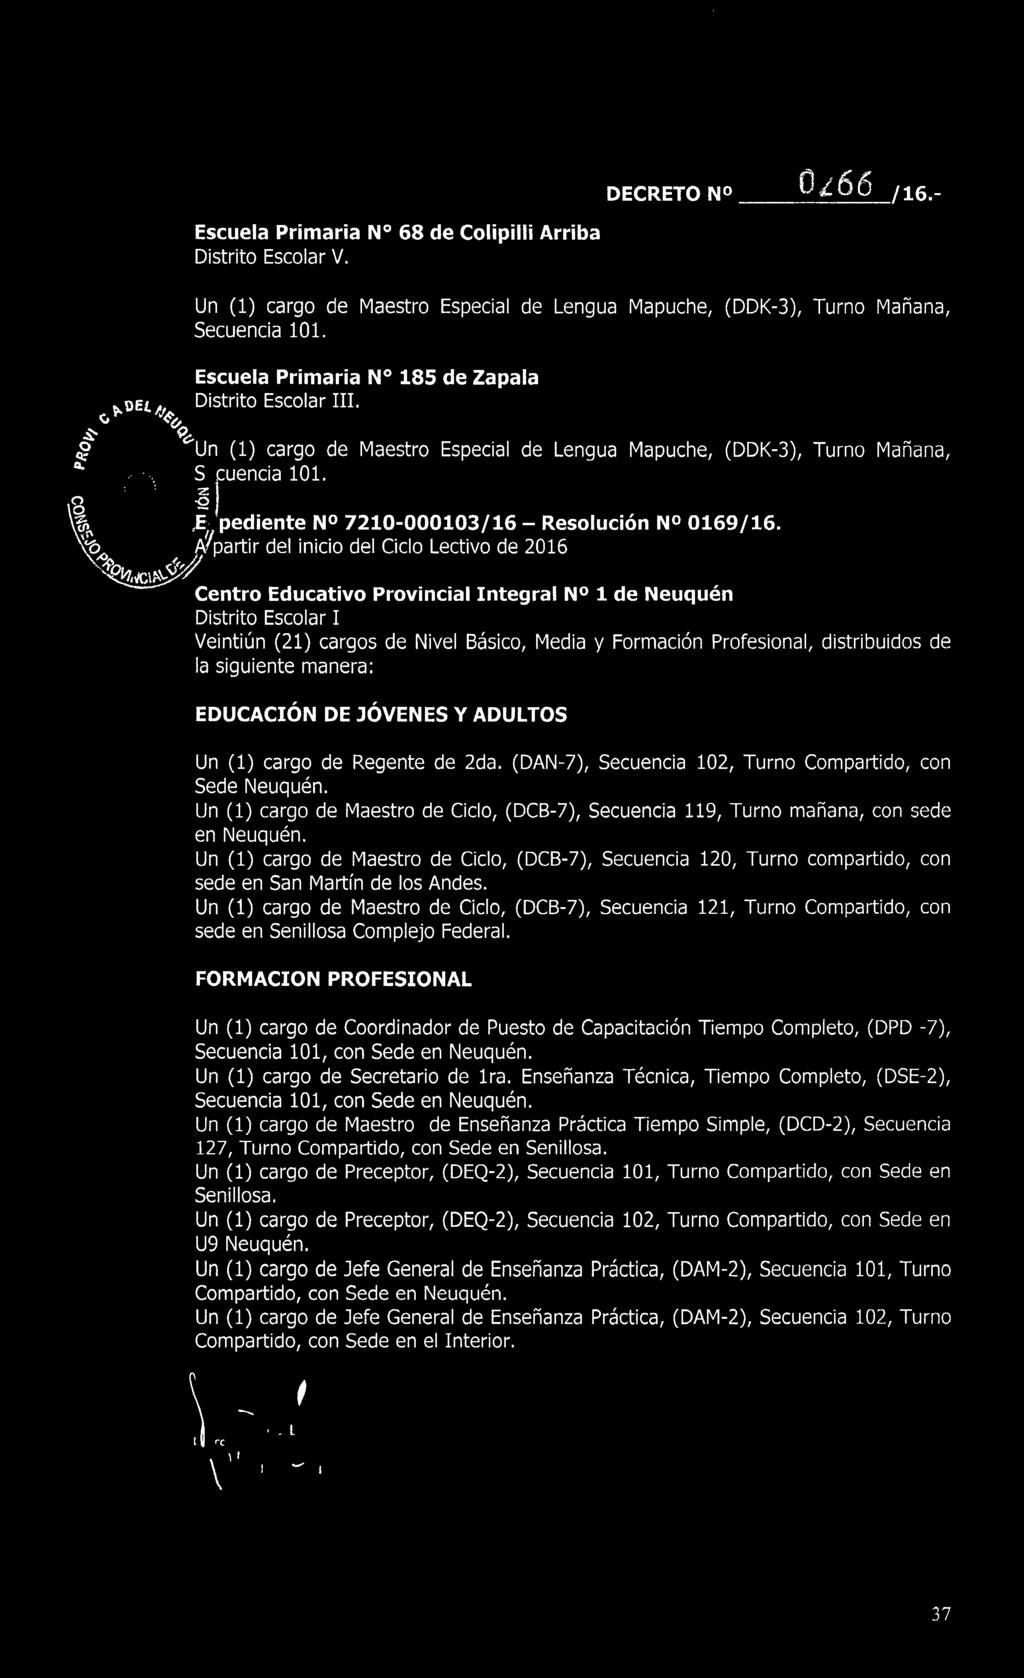 Un (1) cargo de Maestro de Ciclo, (DCB-7), Secuencia 119, Turno mañana, con sede en Neuquén.